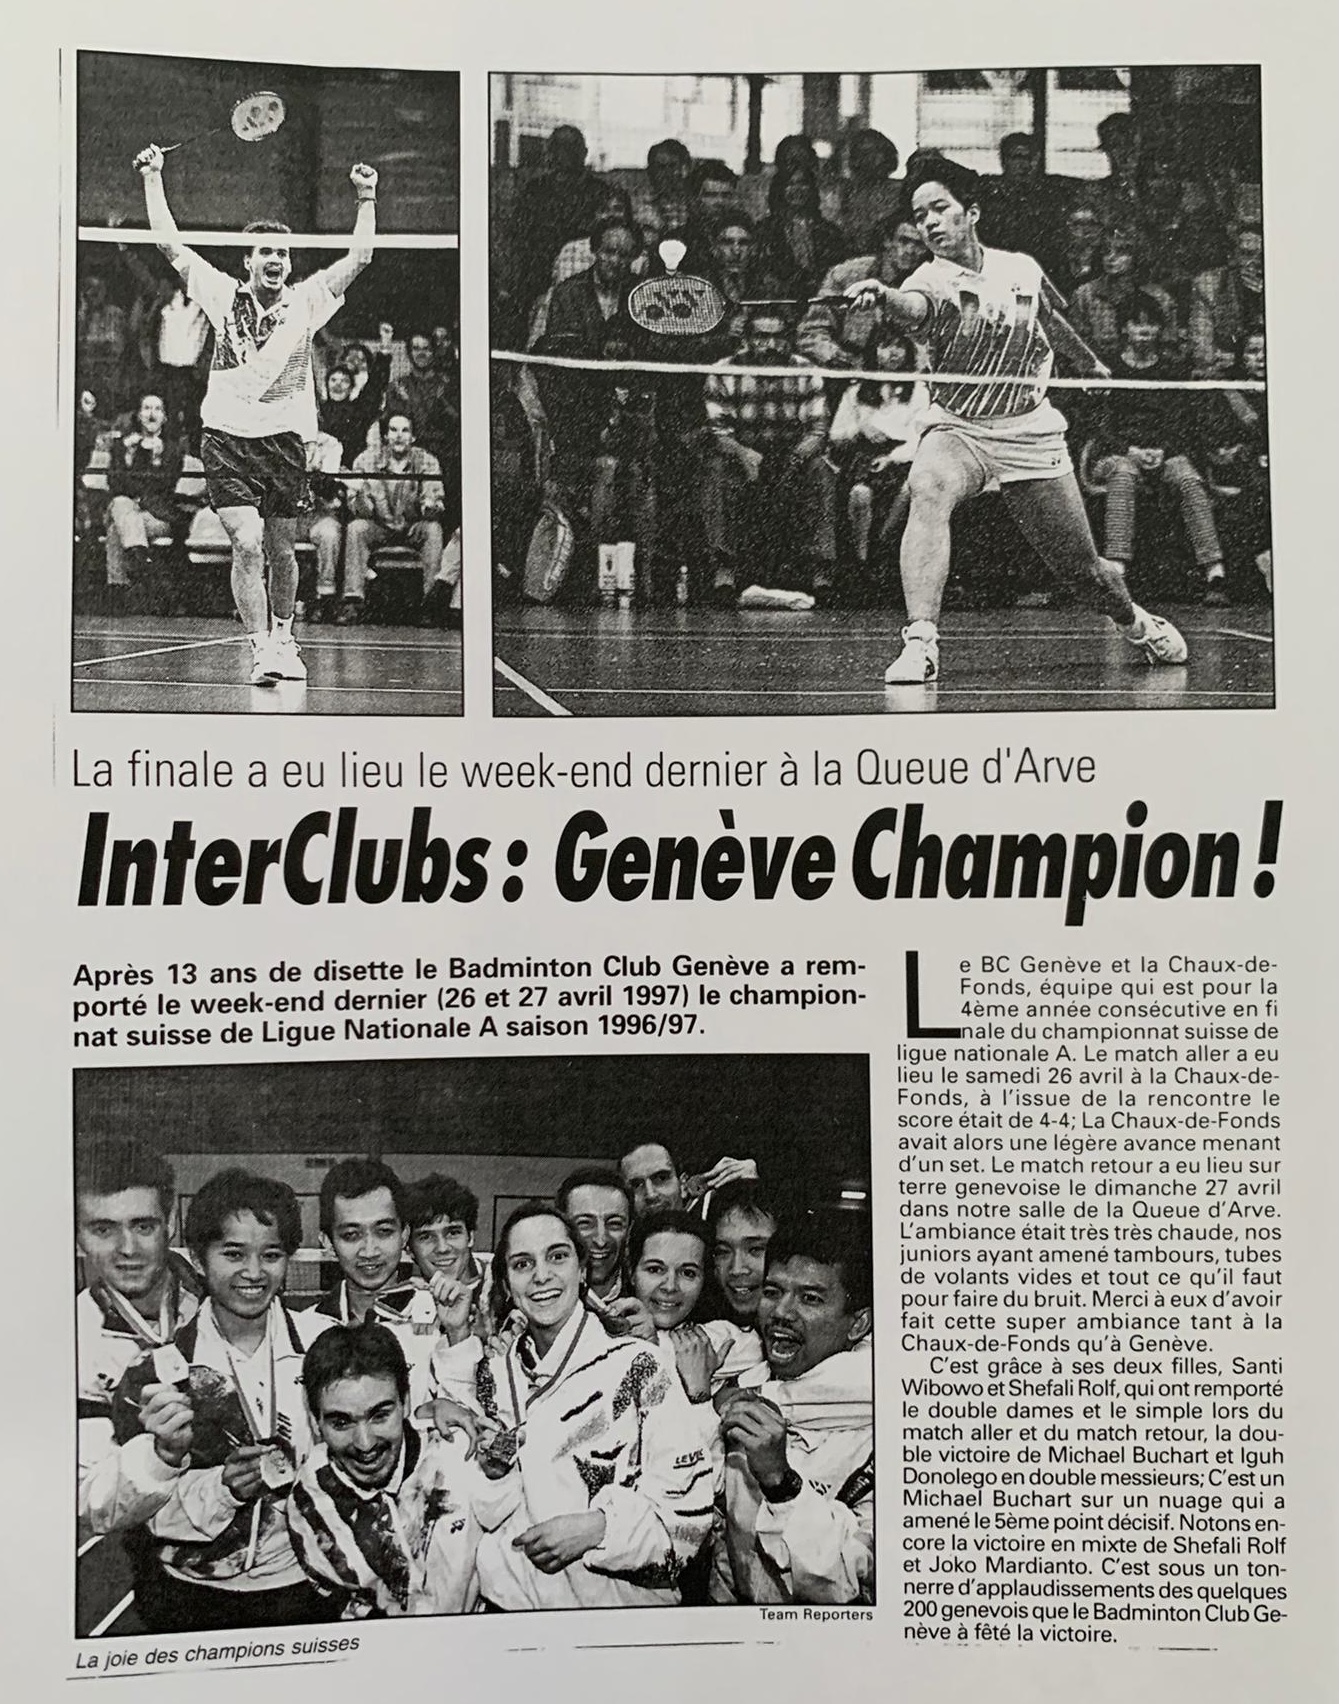 Badminton Club Genève Santi Wibowo 